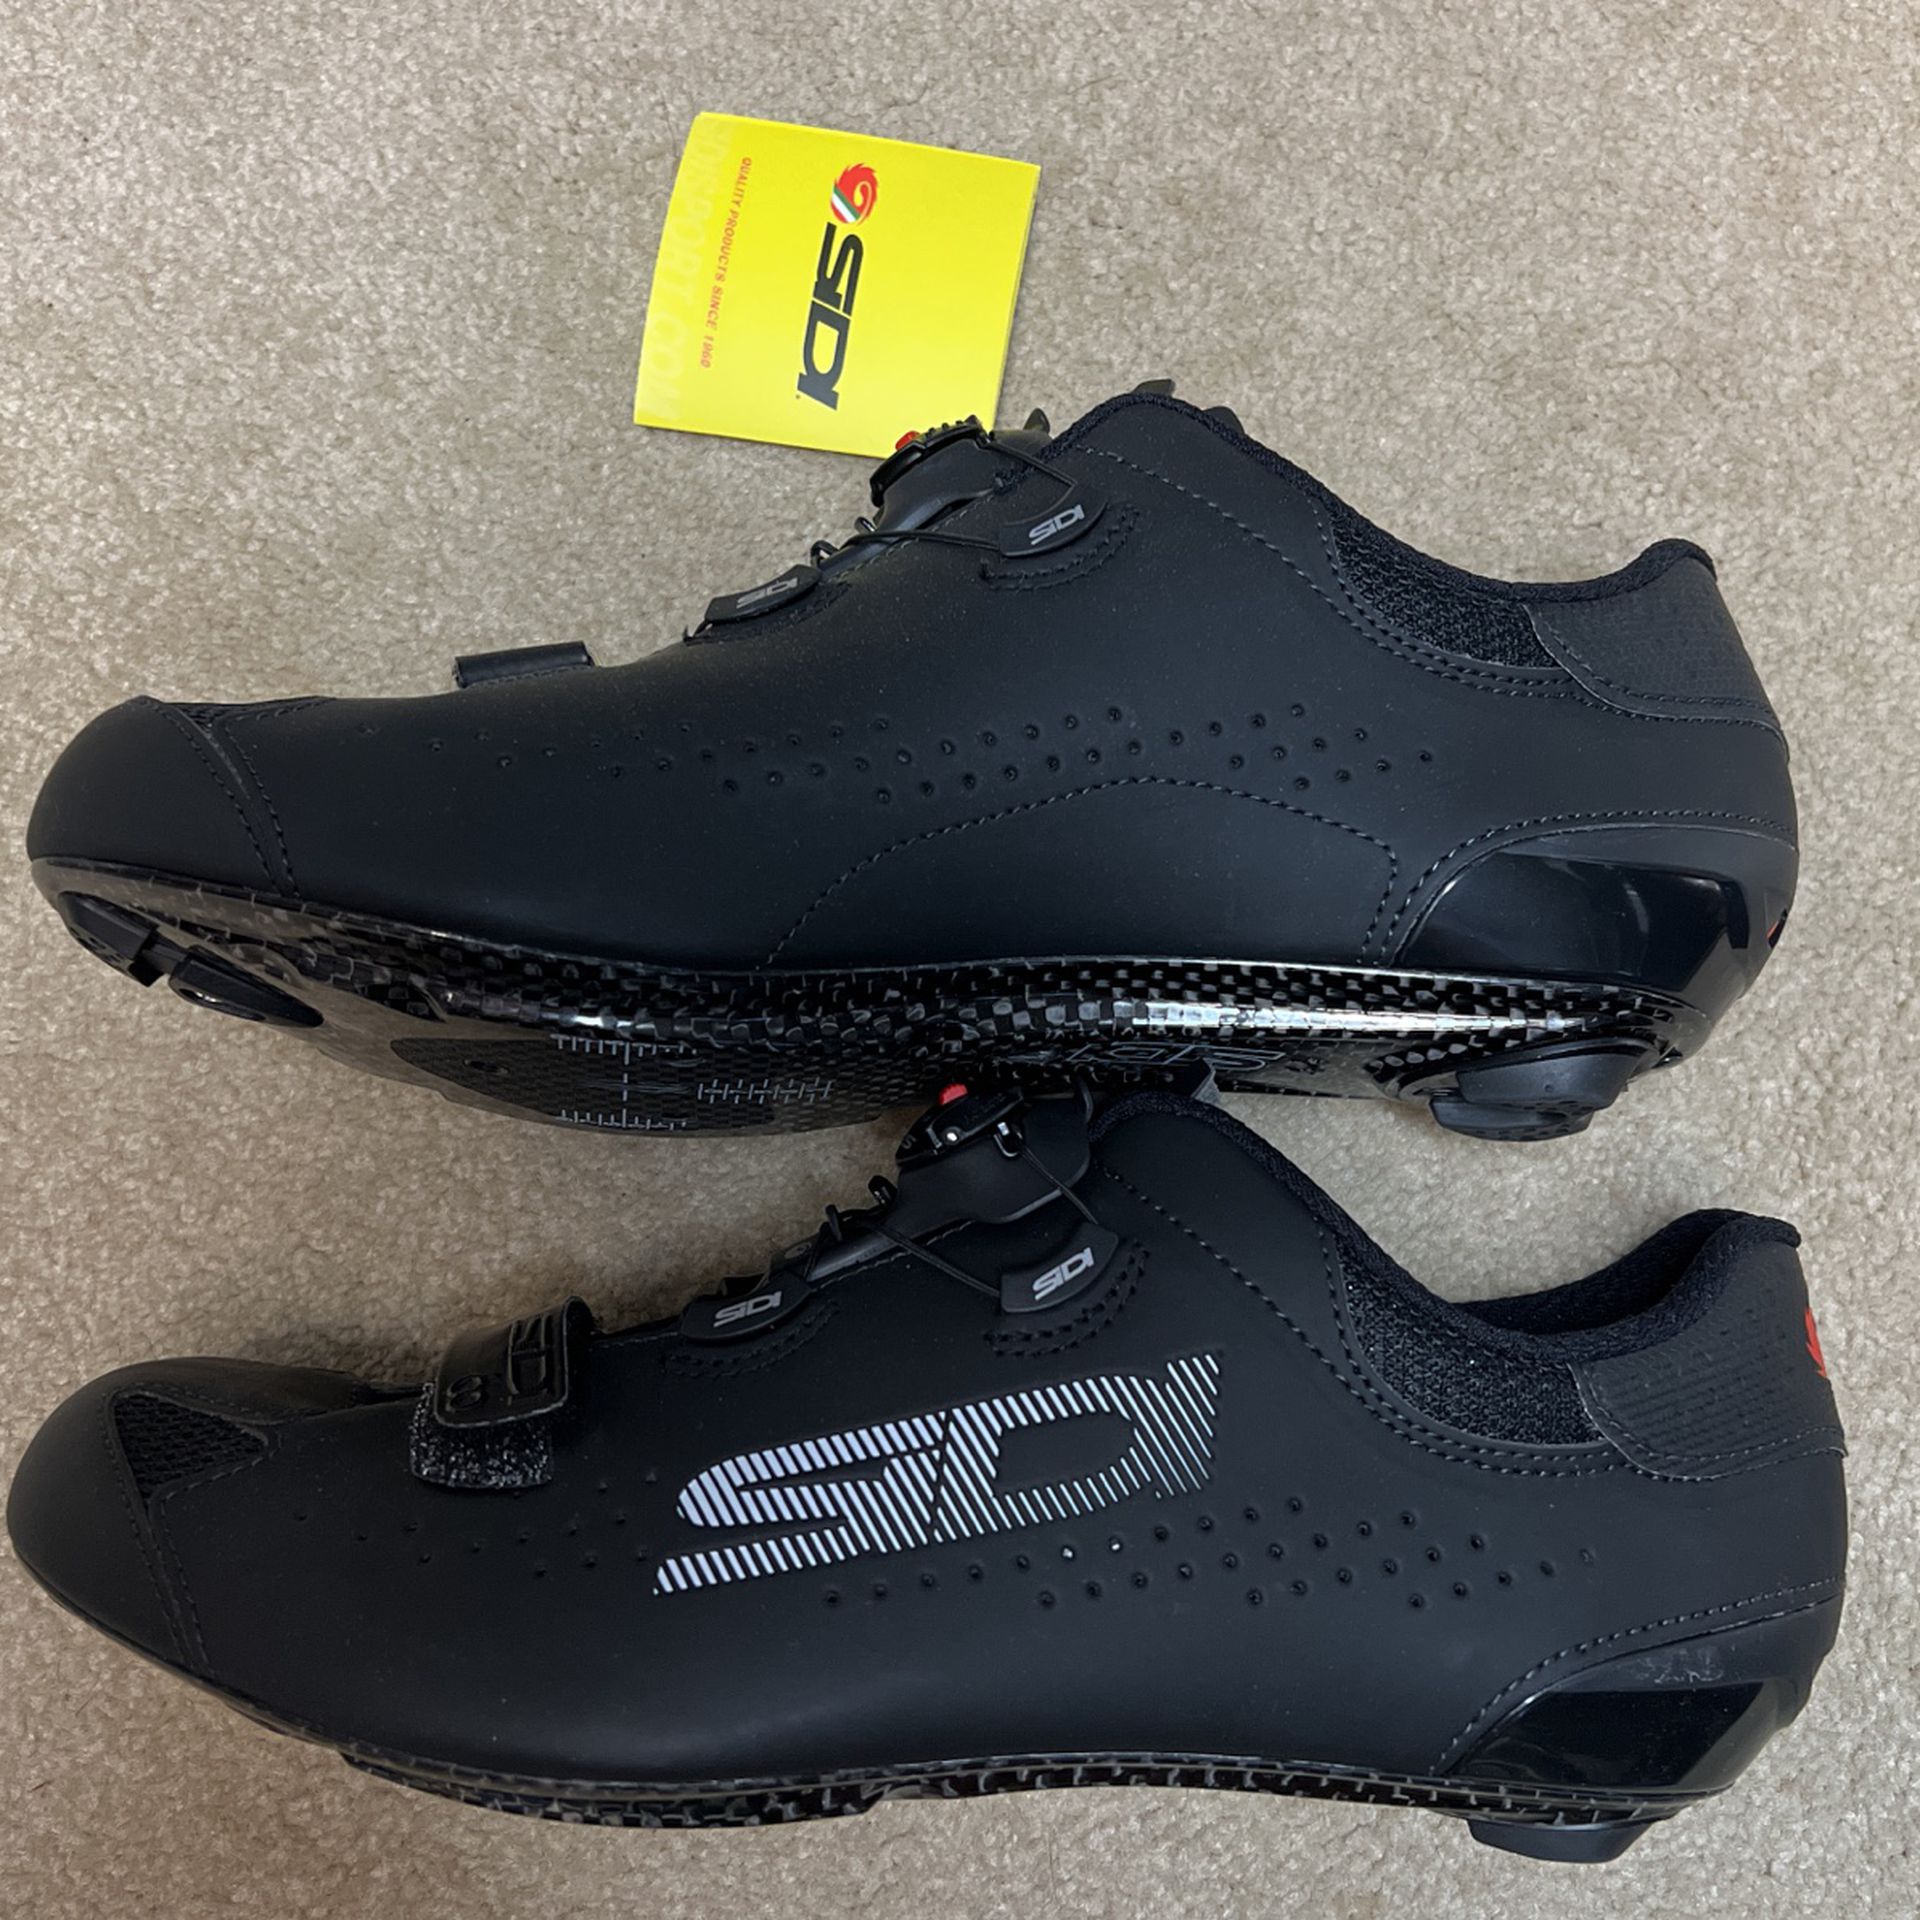 New Sidi Sixty Road Shoes Size 44